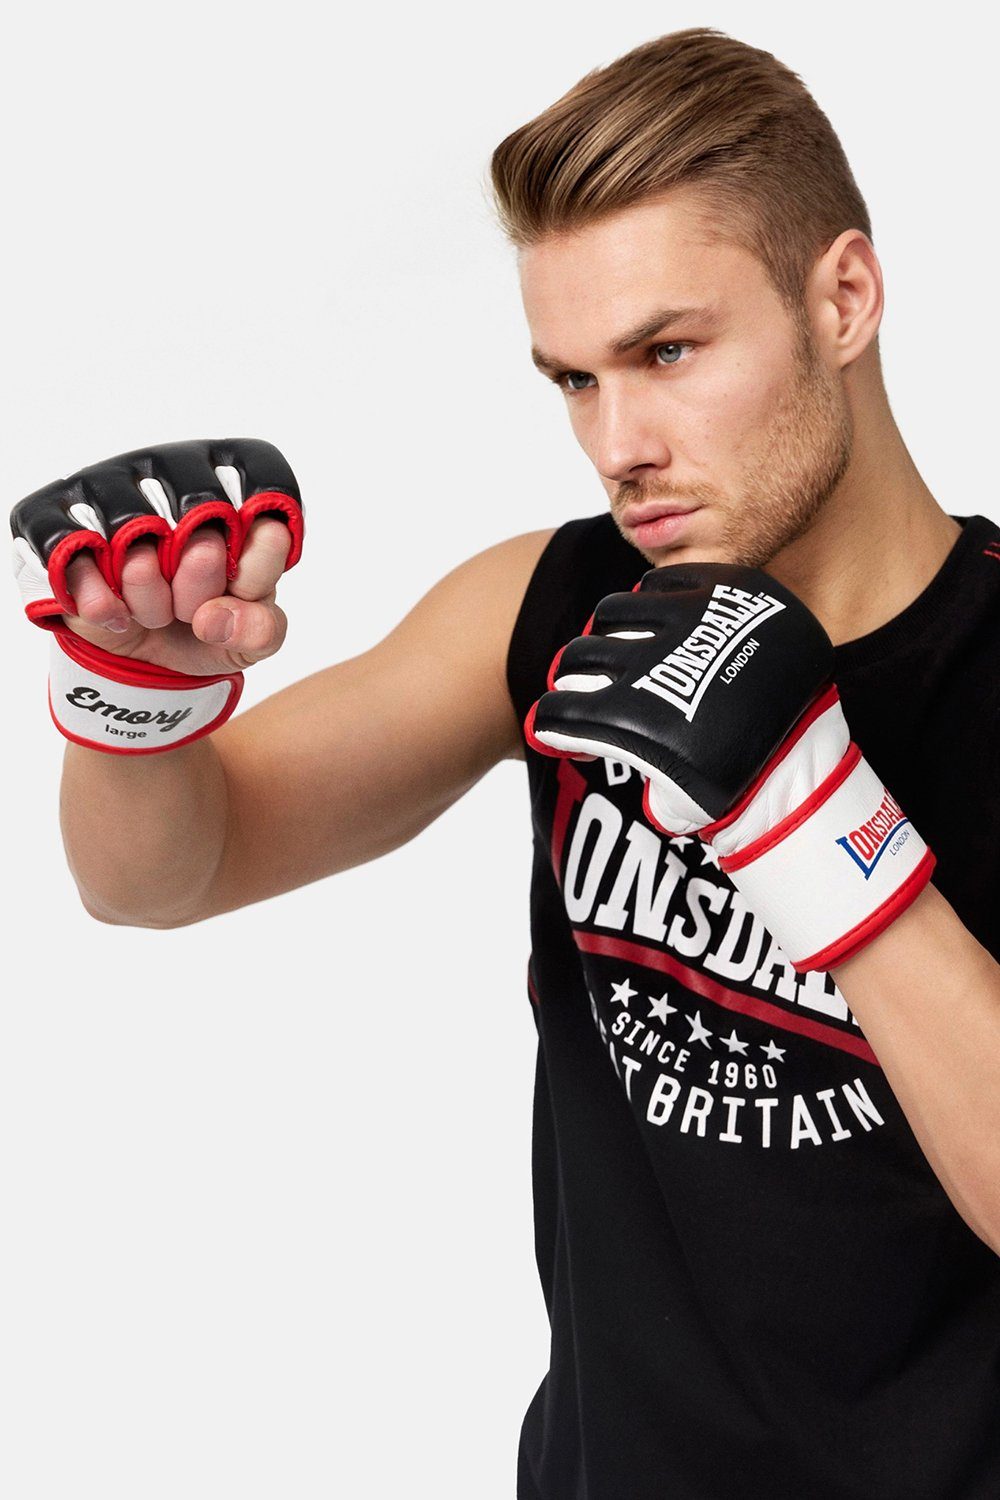 Lonsdale MMA-Handschuhe EMORY